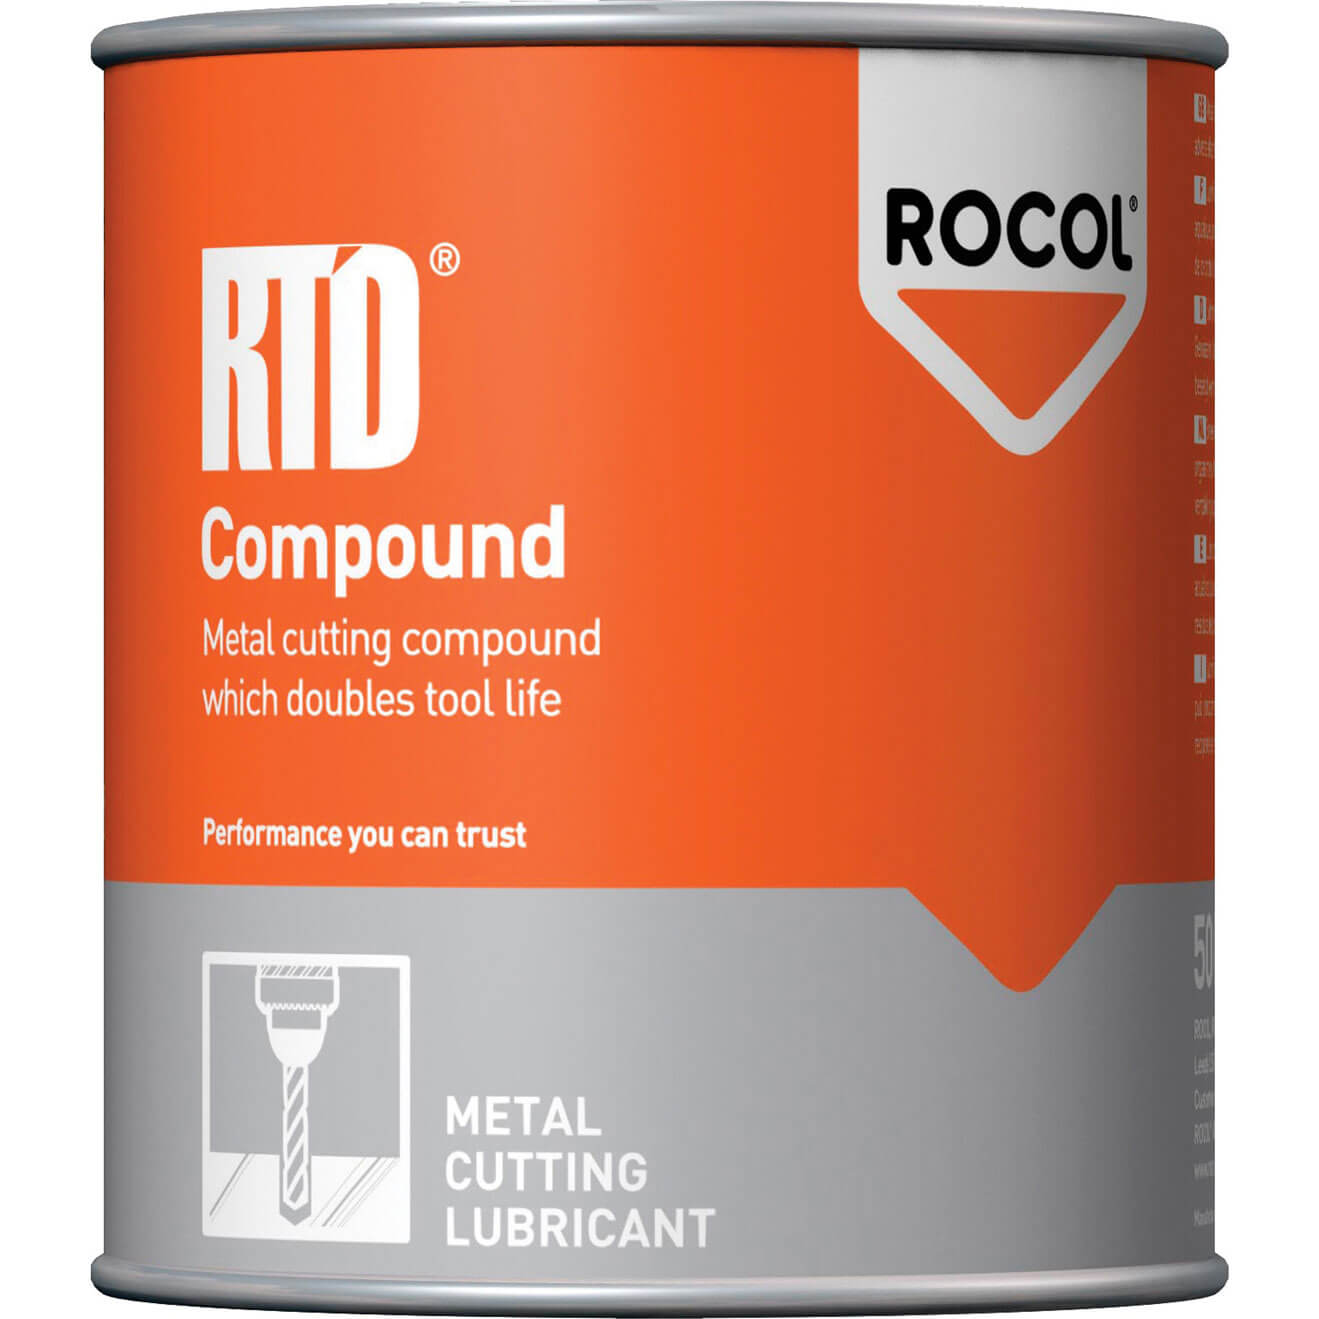 Rocol RTD Cutting Compound 500g